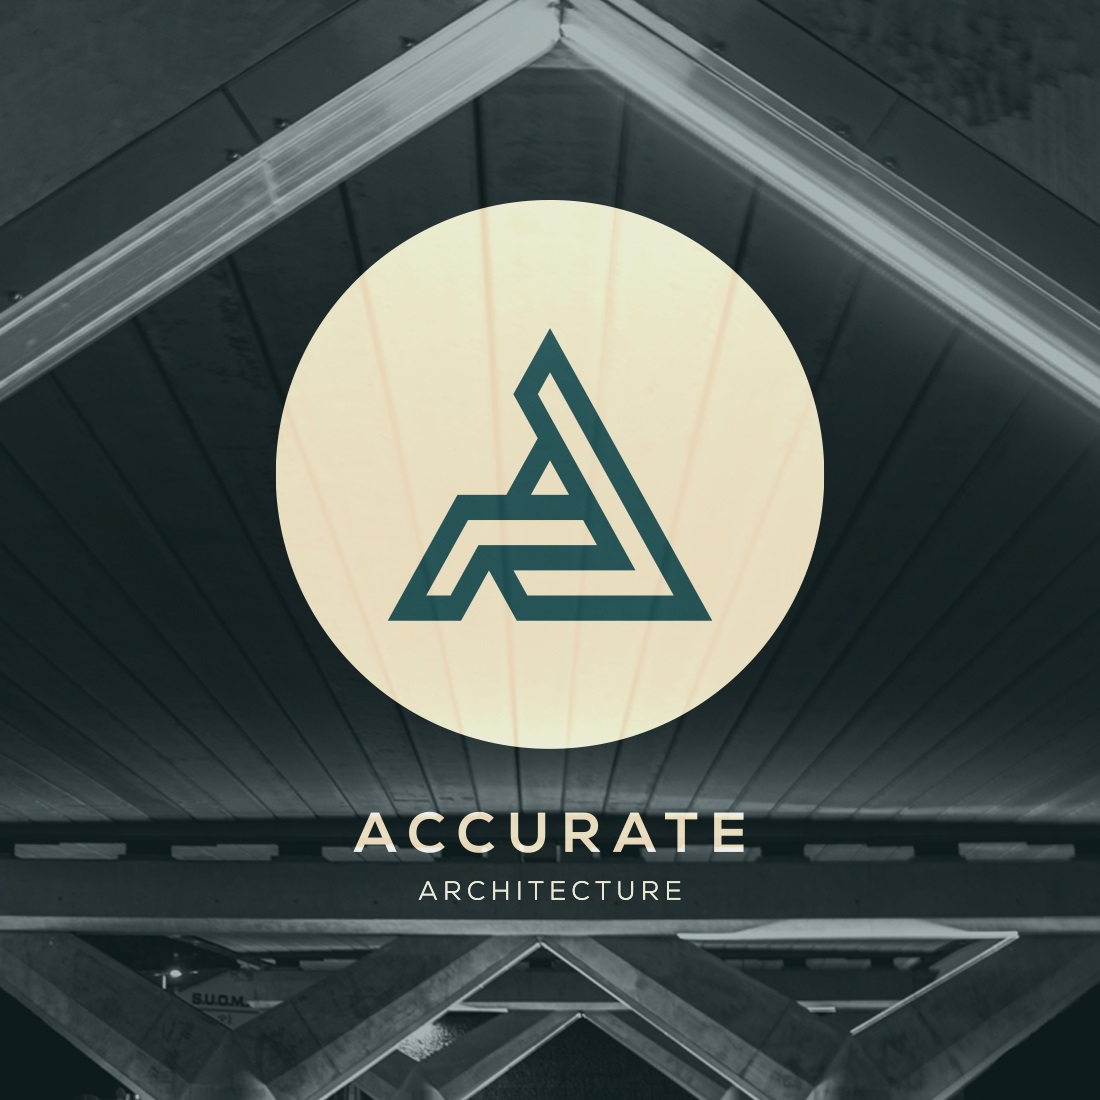 Letter A & Architecture Design Logo Template cover image.